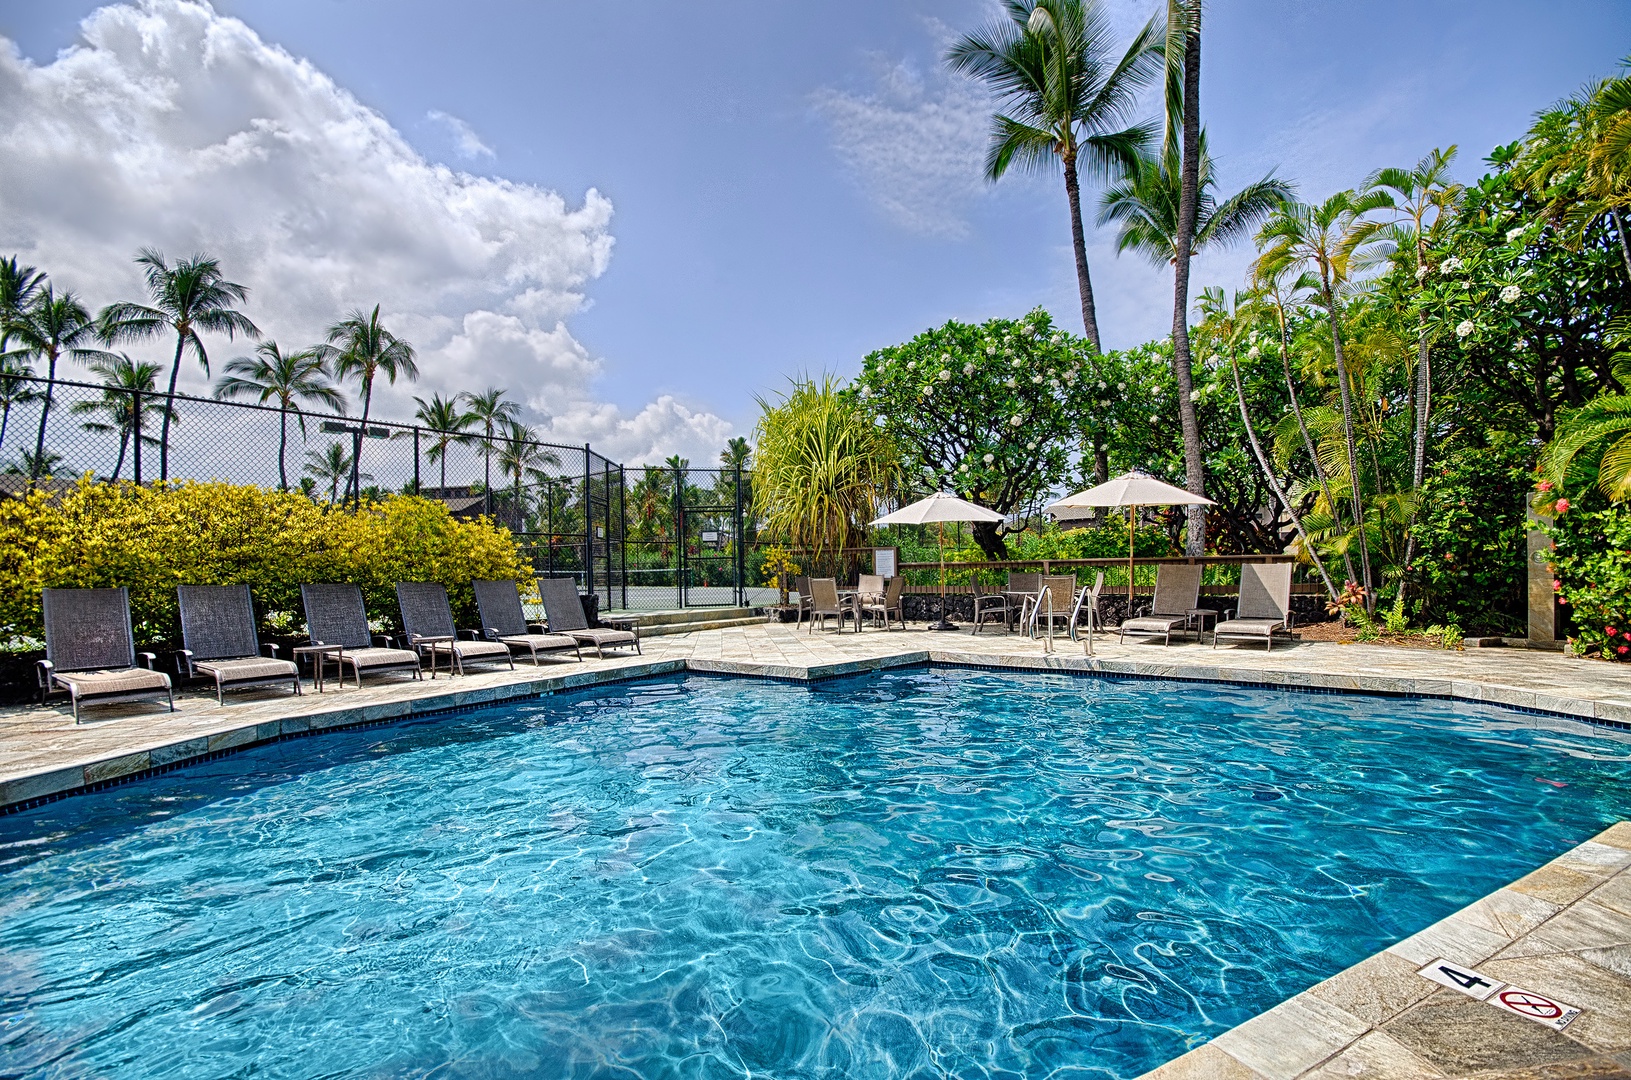 Kailua Kona Vacation Rentals, Kanaloa at Kona 1606 - Relax pool side in the loungers!